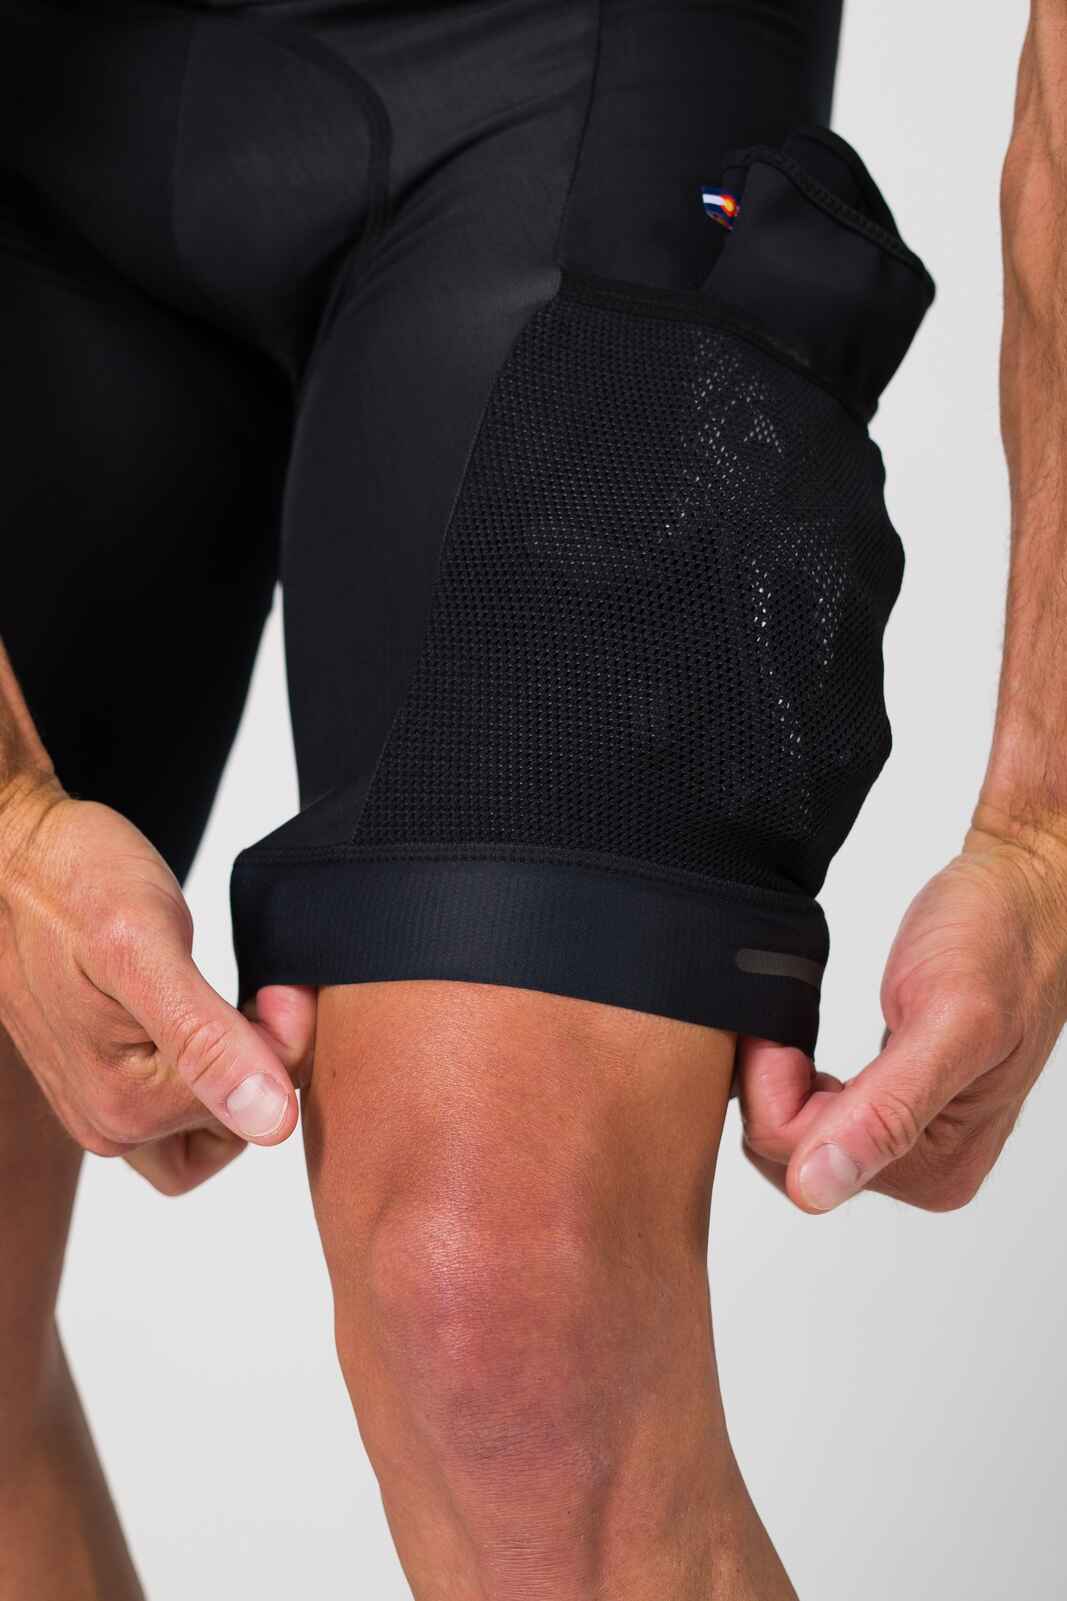 Men's Thermal Cycling Bibs - Alpine Leg Band Detail